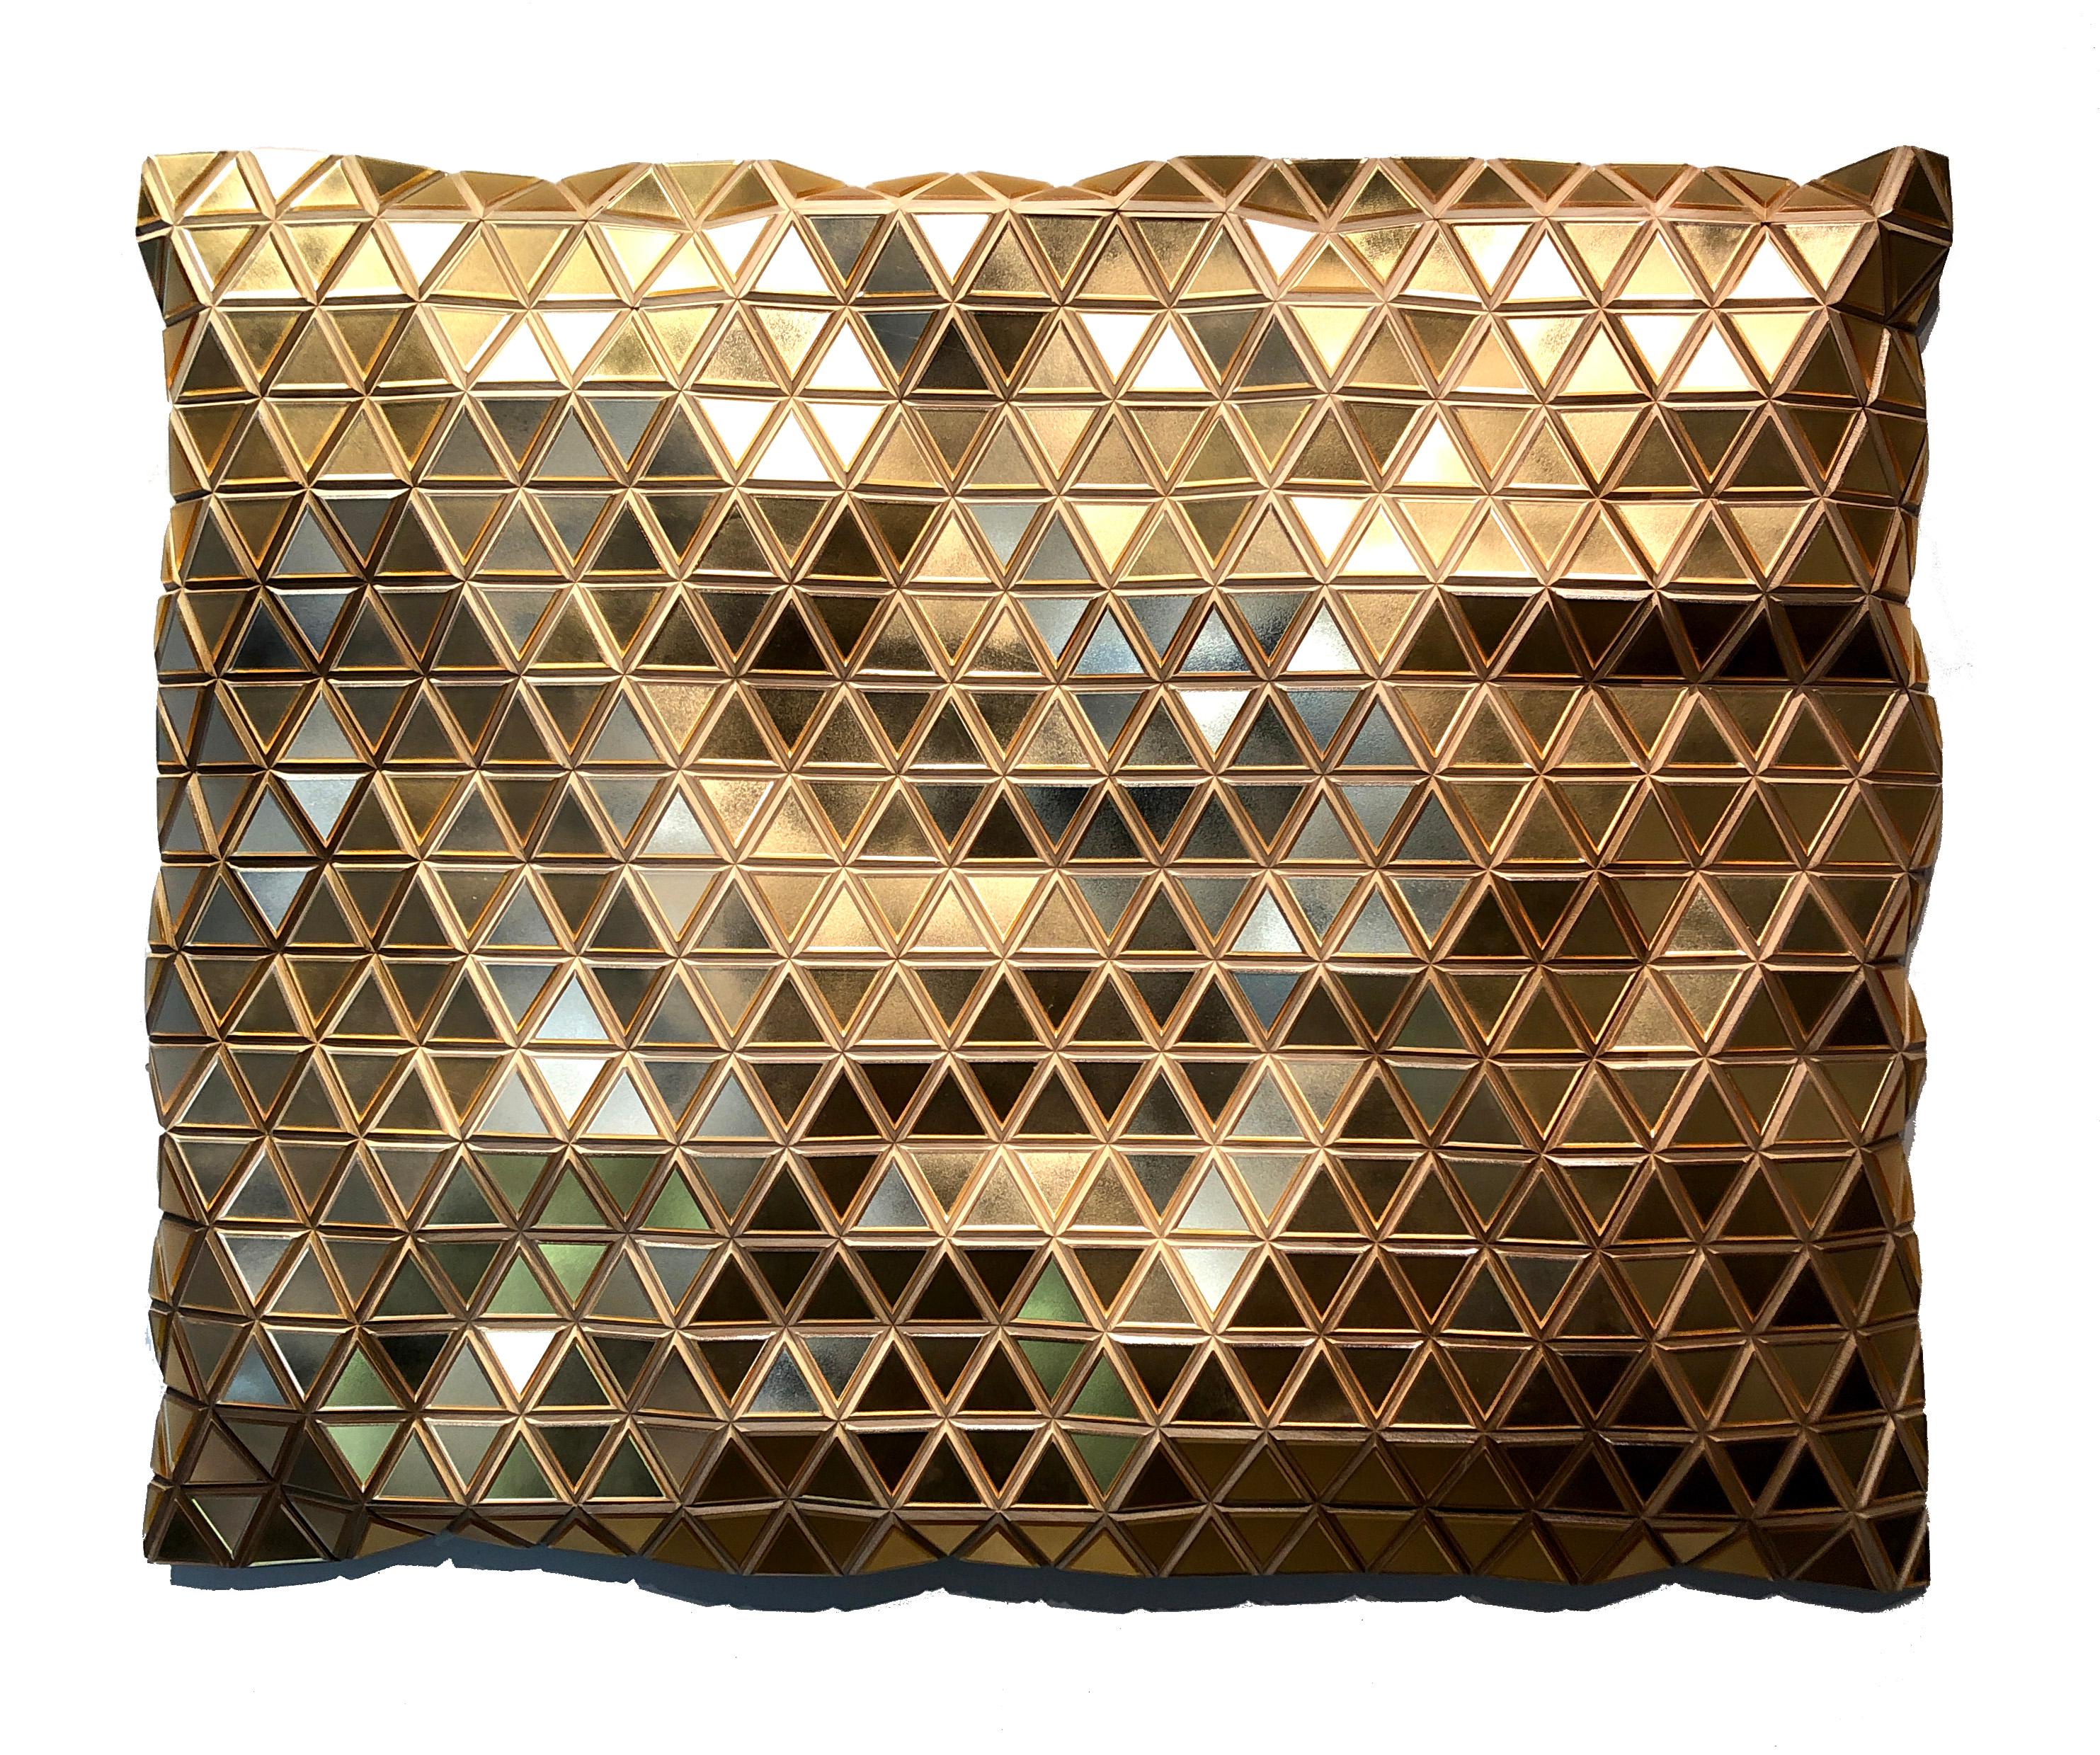 El Dorado - Sculptural Geometric Abstract Gold Wall Artwork